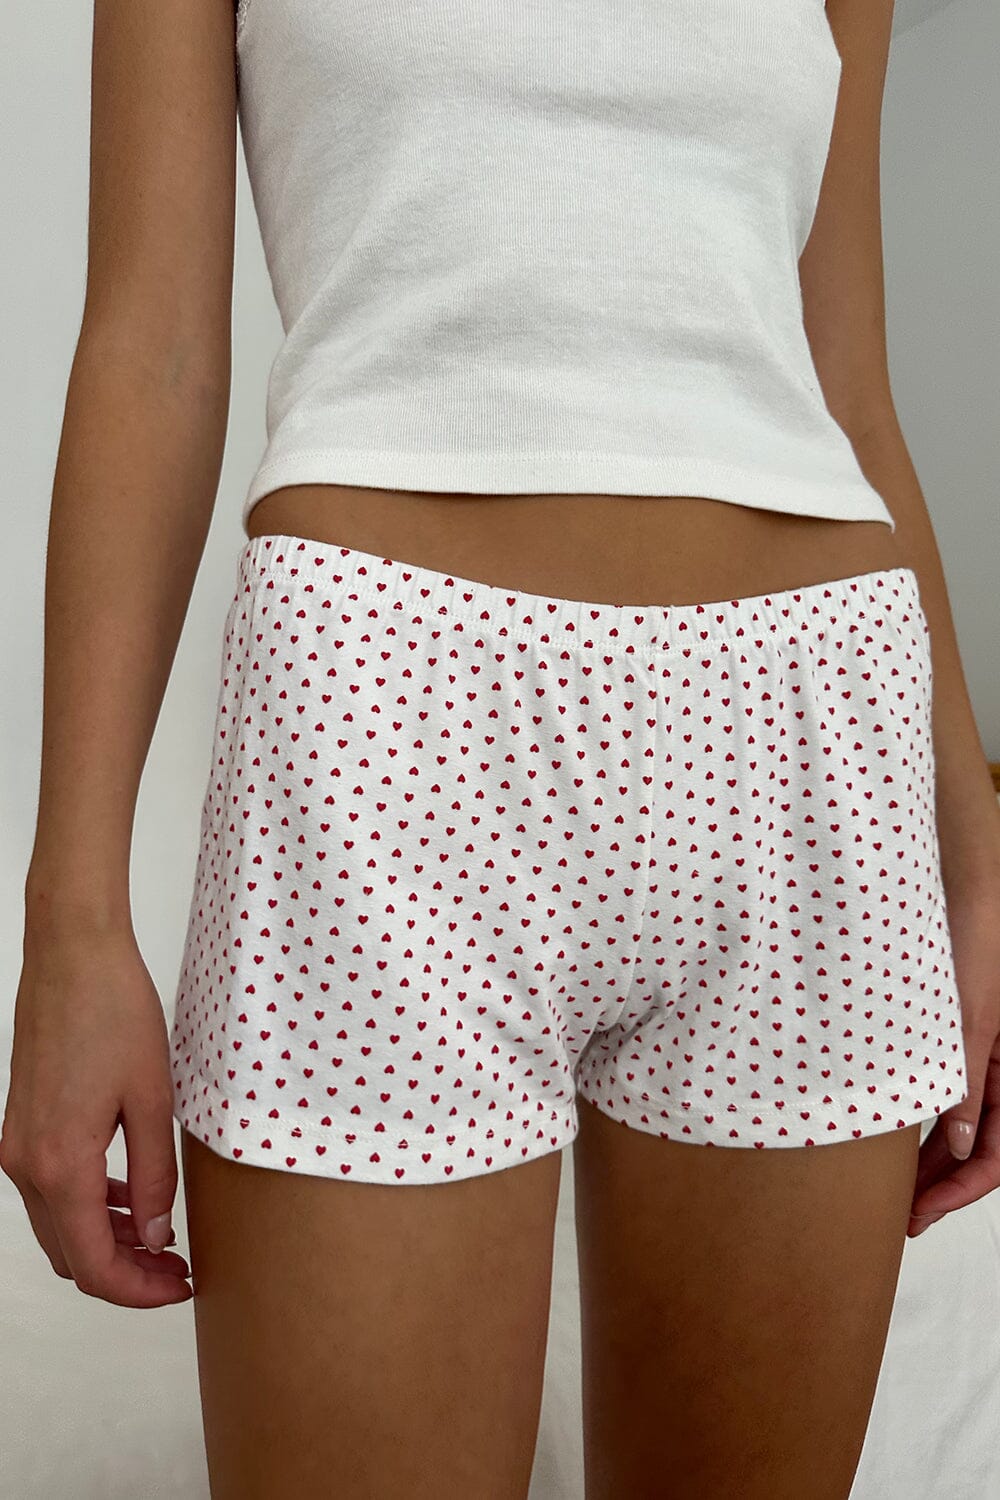 Brandy Melville Heart Pajamas White - $63 (33% Off Retail) New